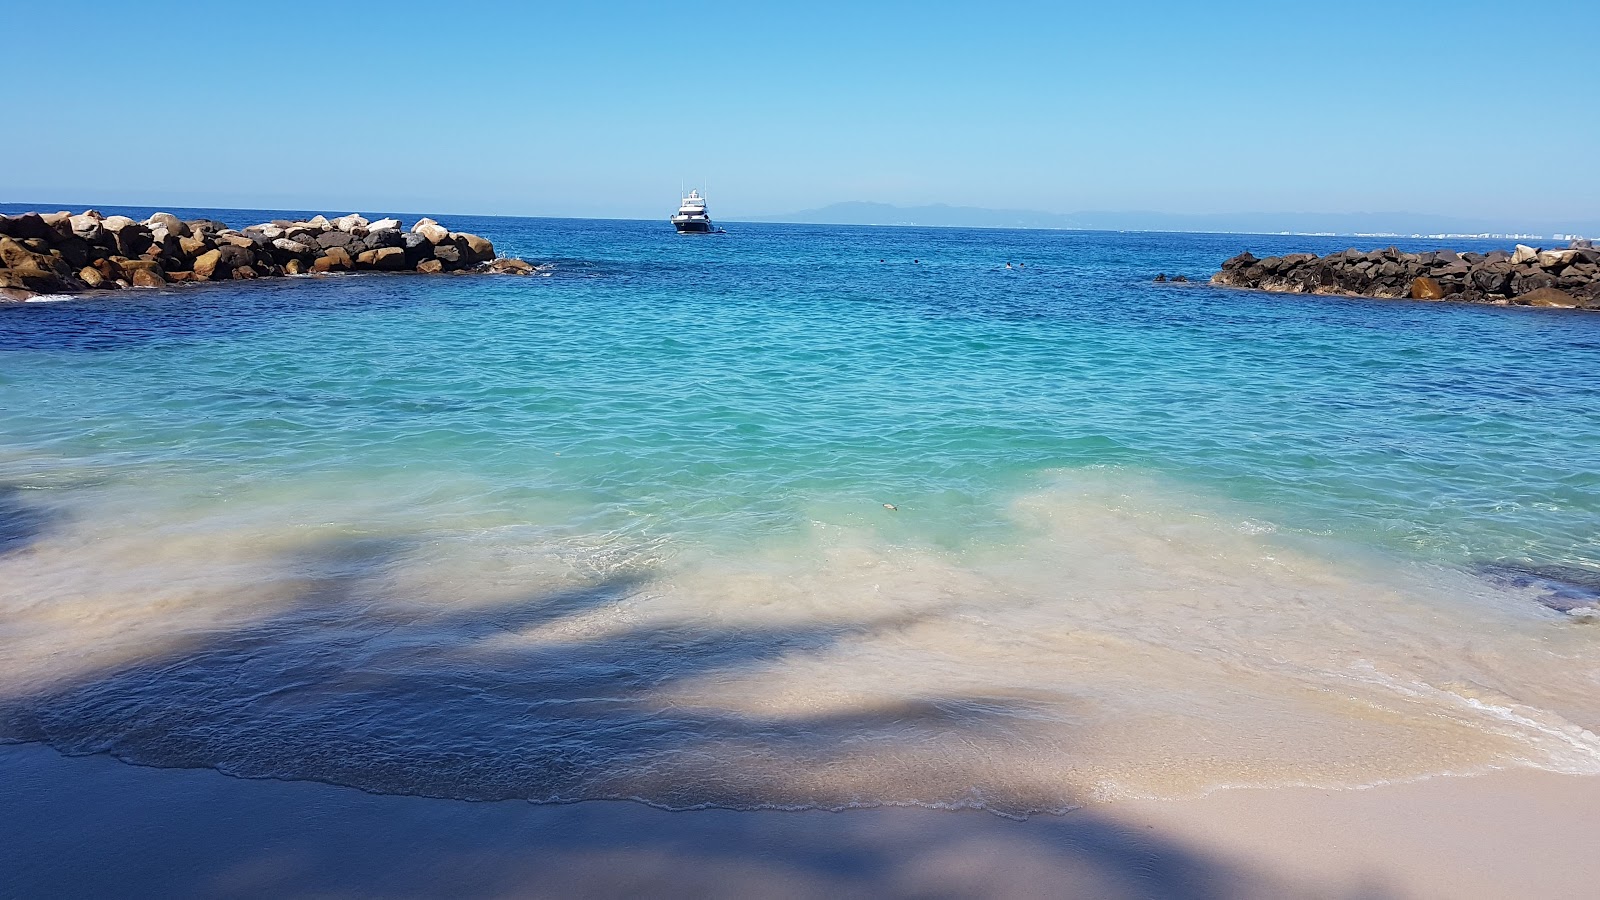 Photo of Garza Blanca II beach resort area